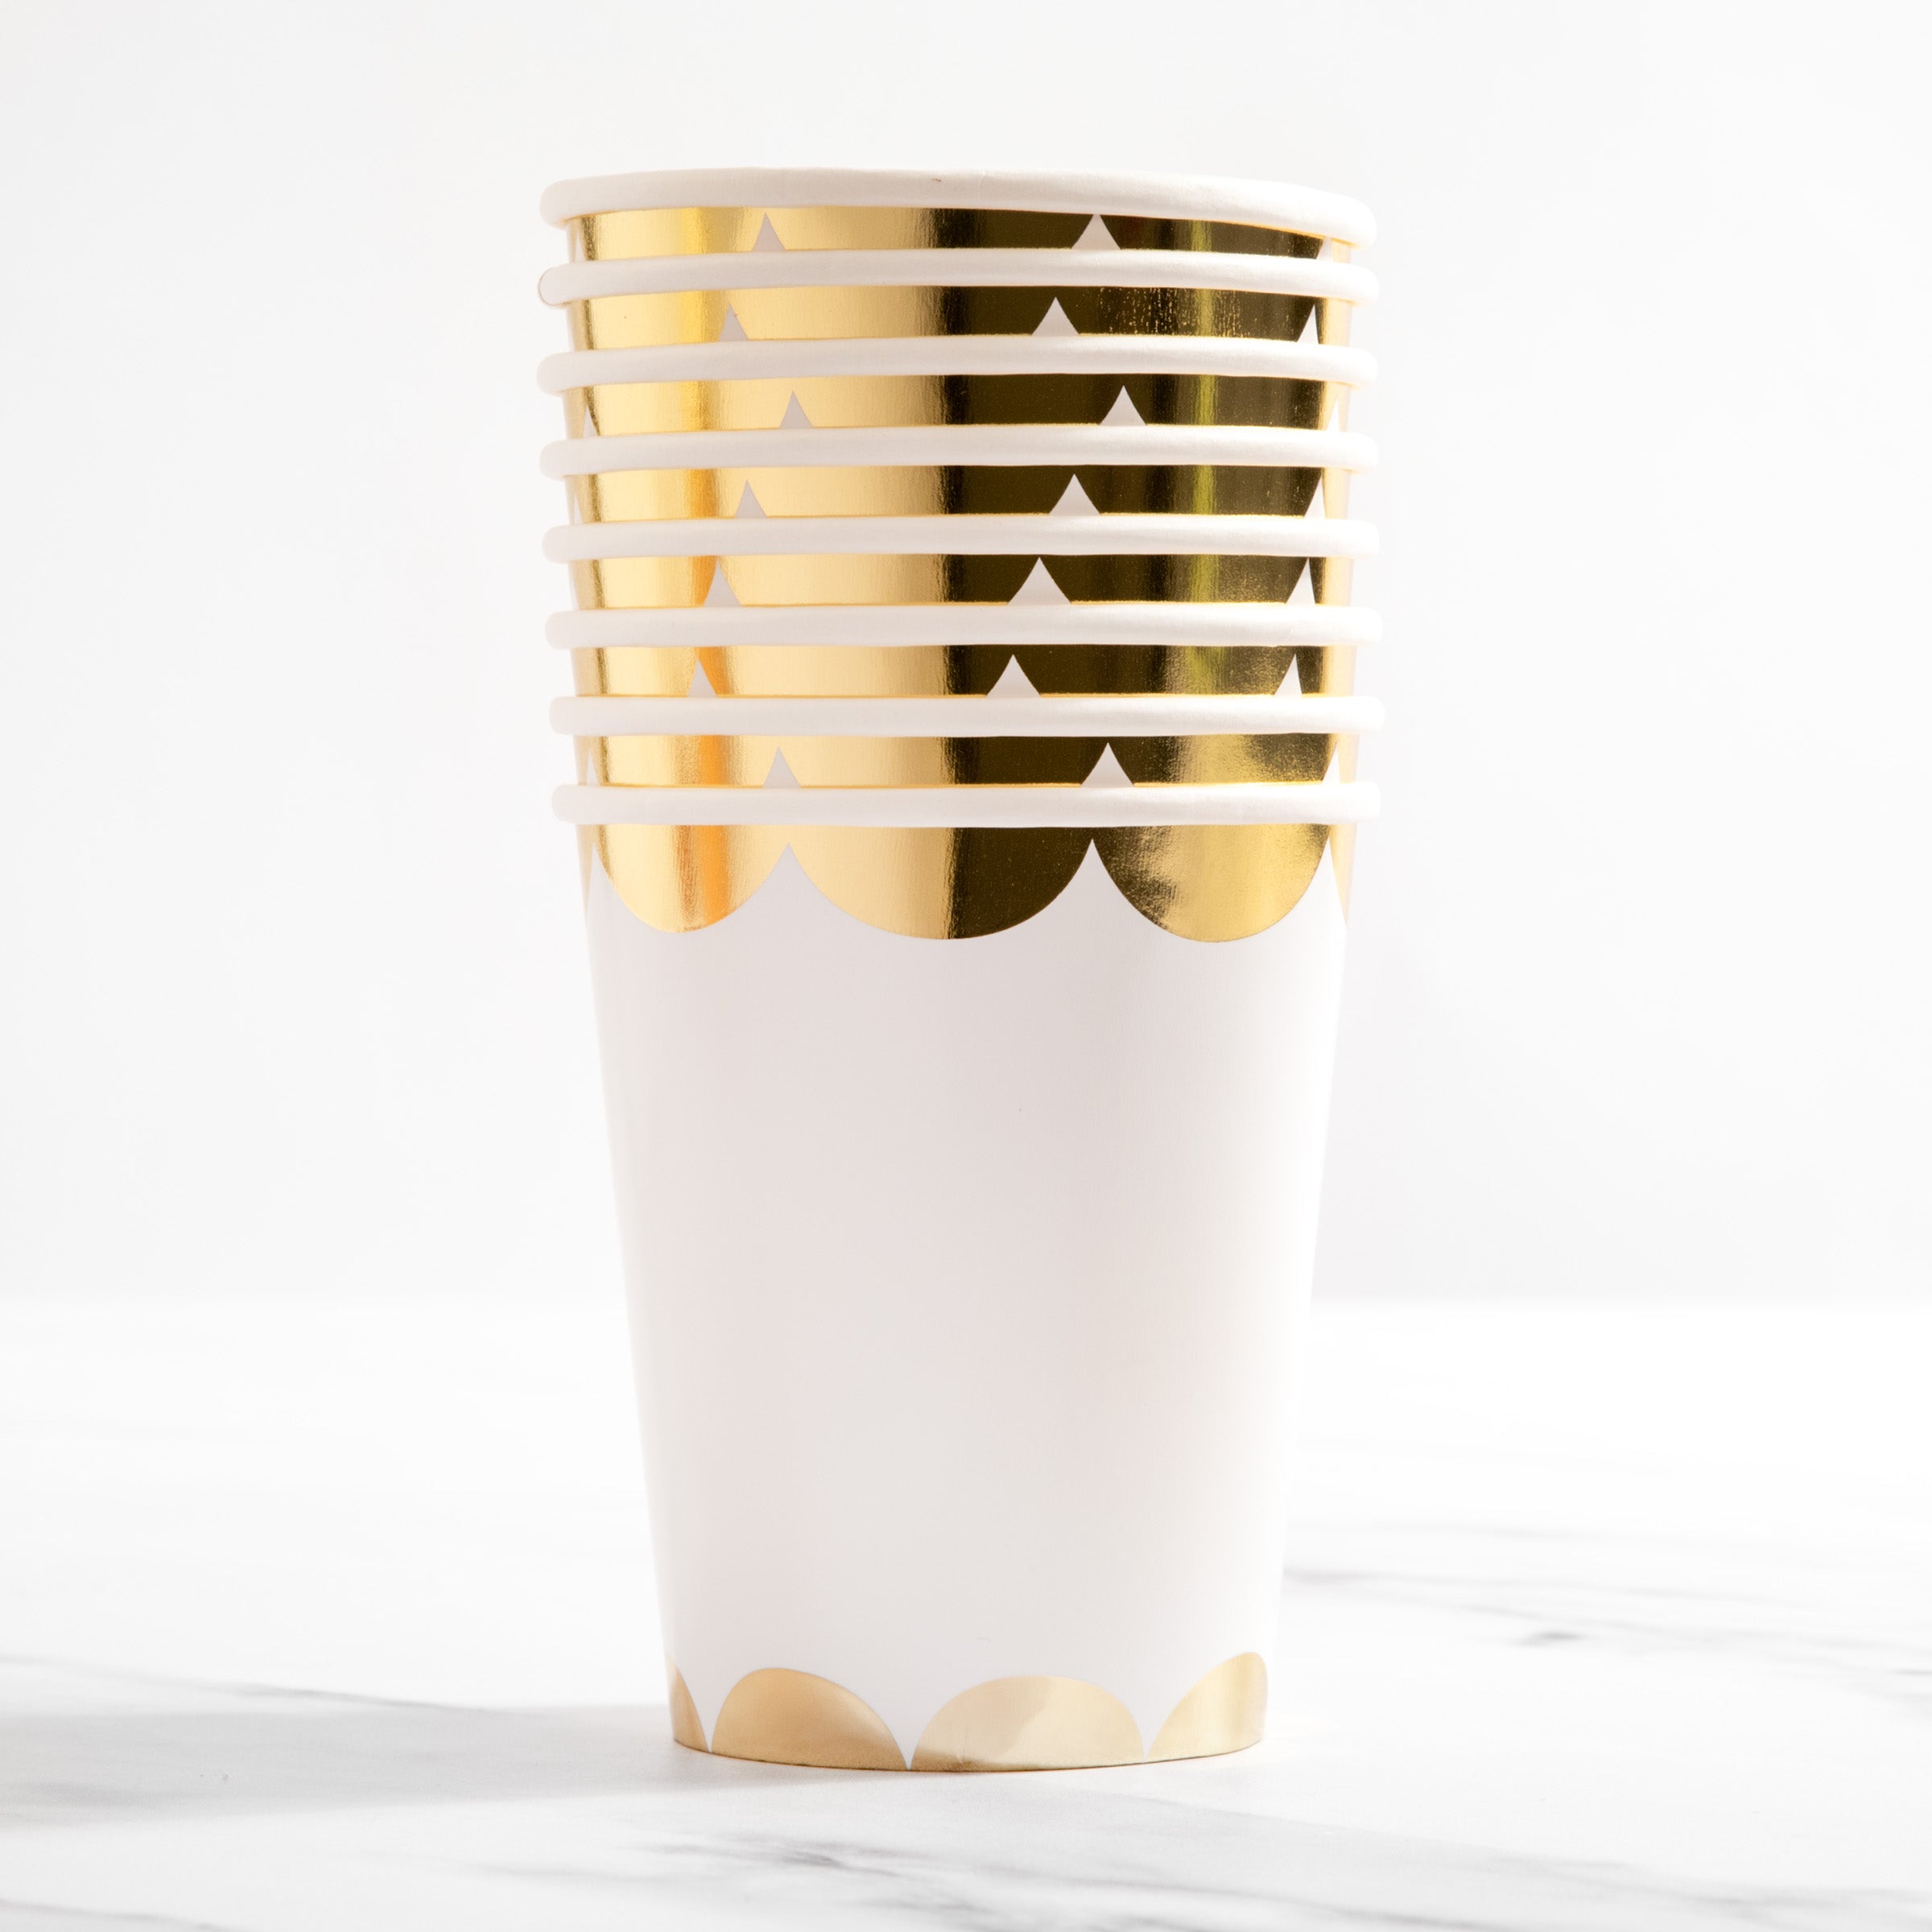 igourmet_1178_White Paper Cups with Gold Scalloped Edge_Meri Meri_housewares